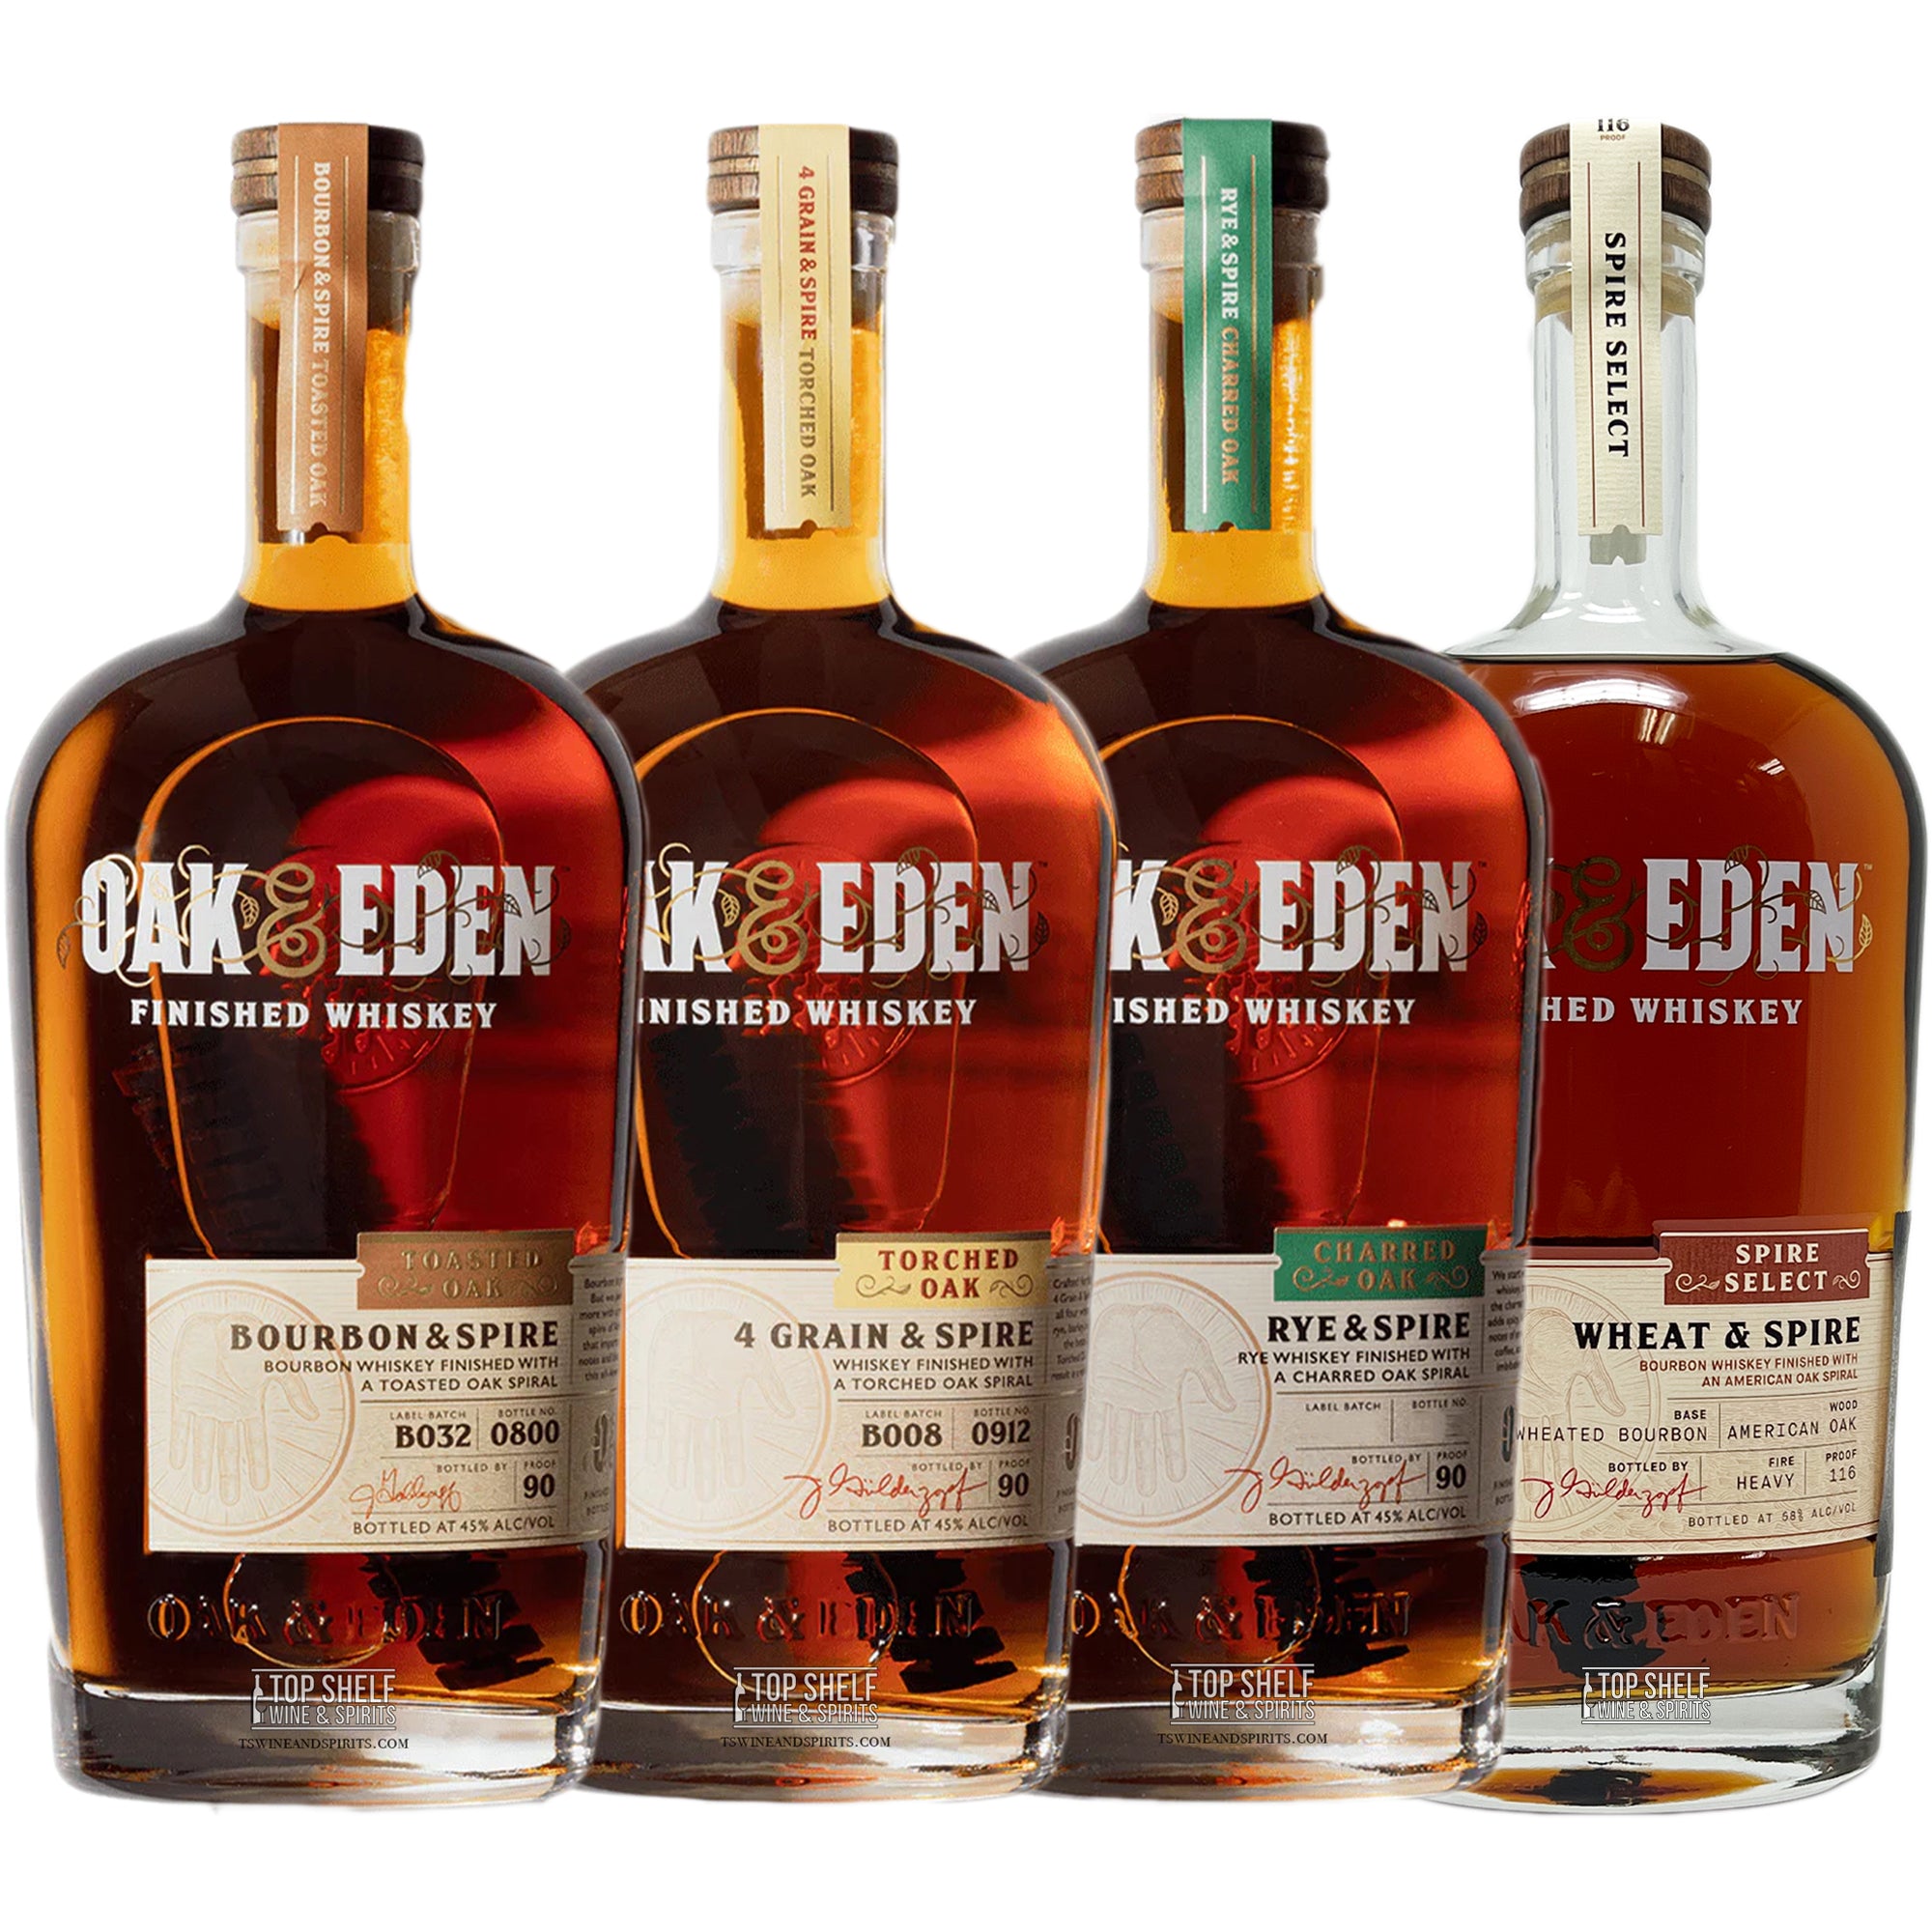 oak and eden whiskey